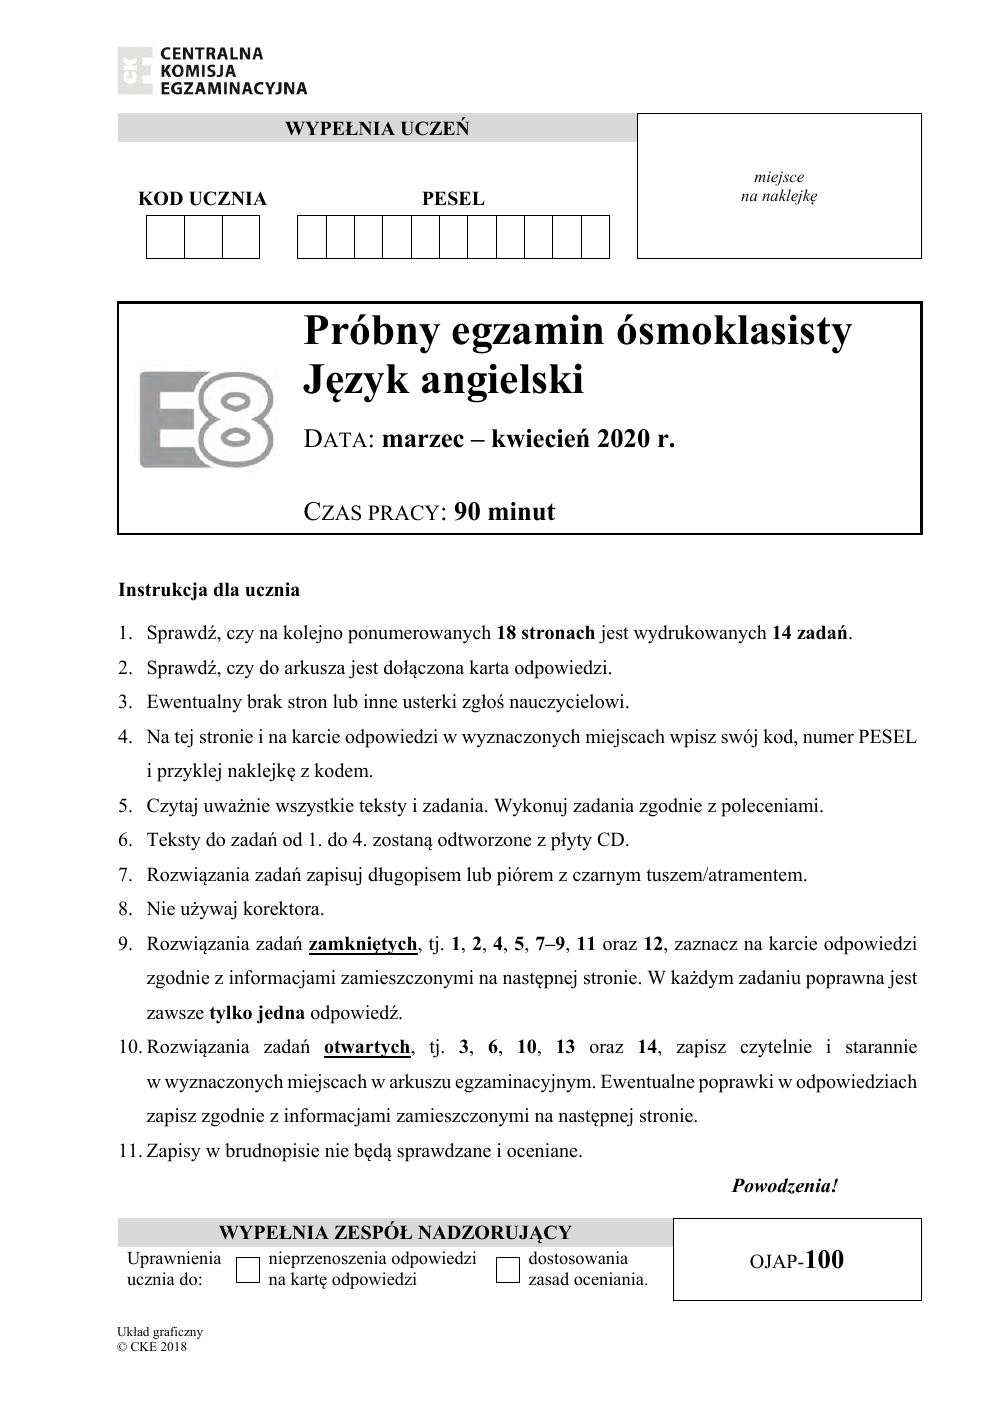 angielski-probny-egzamin-osmoklasisty-2020-01